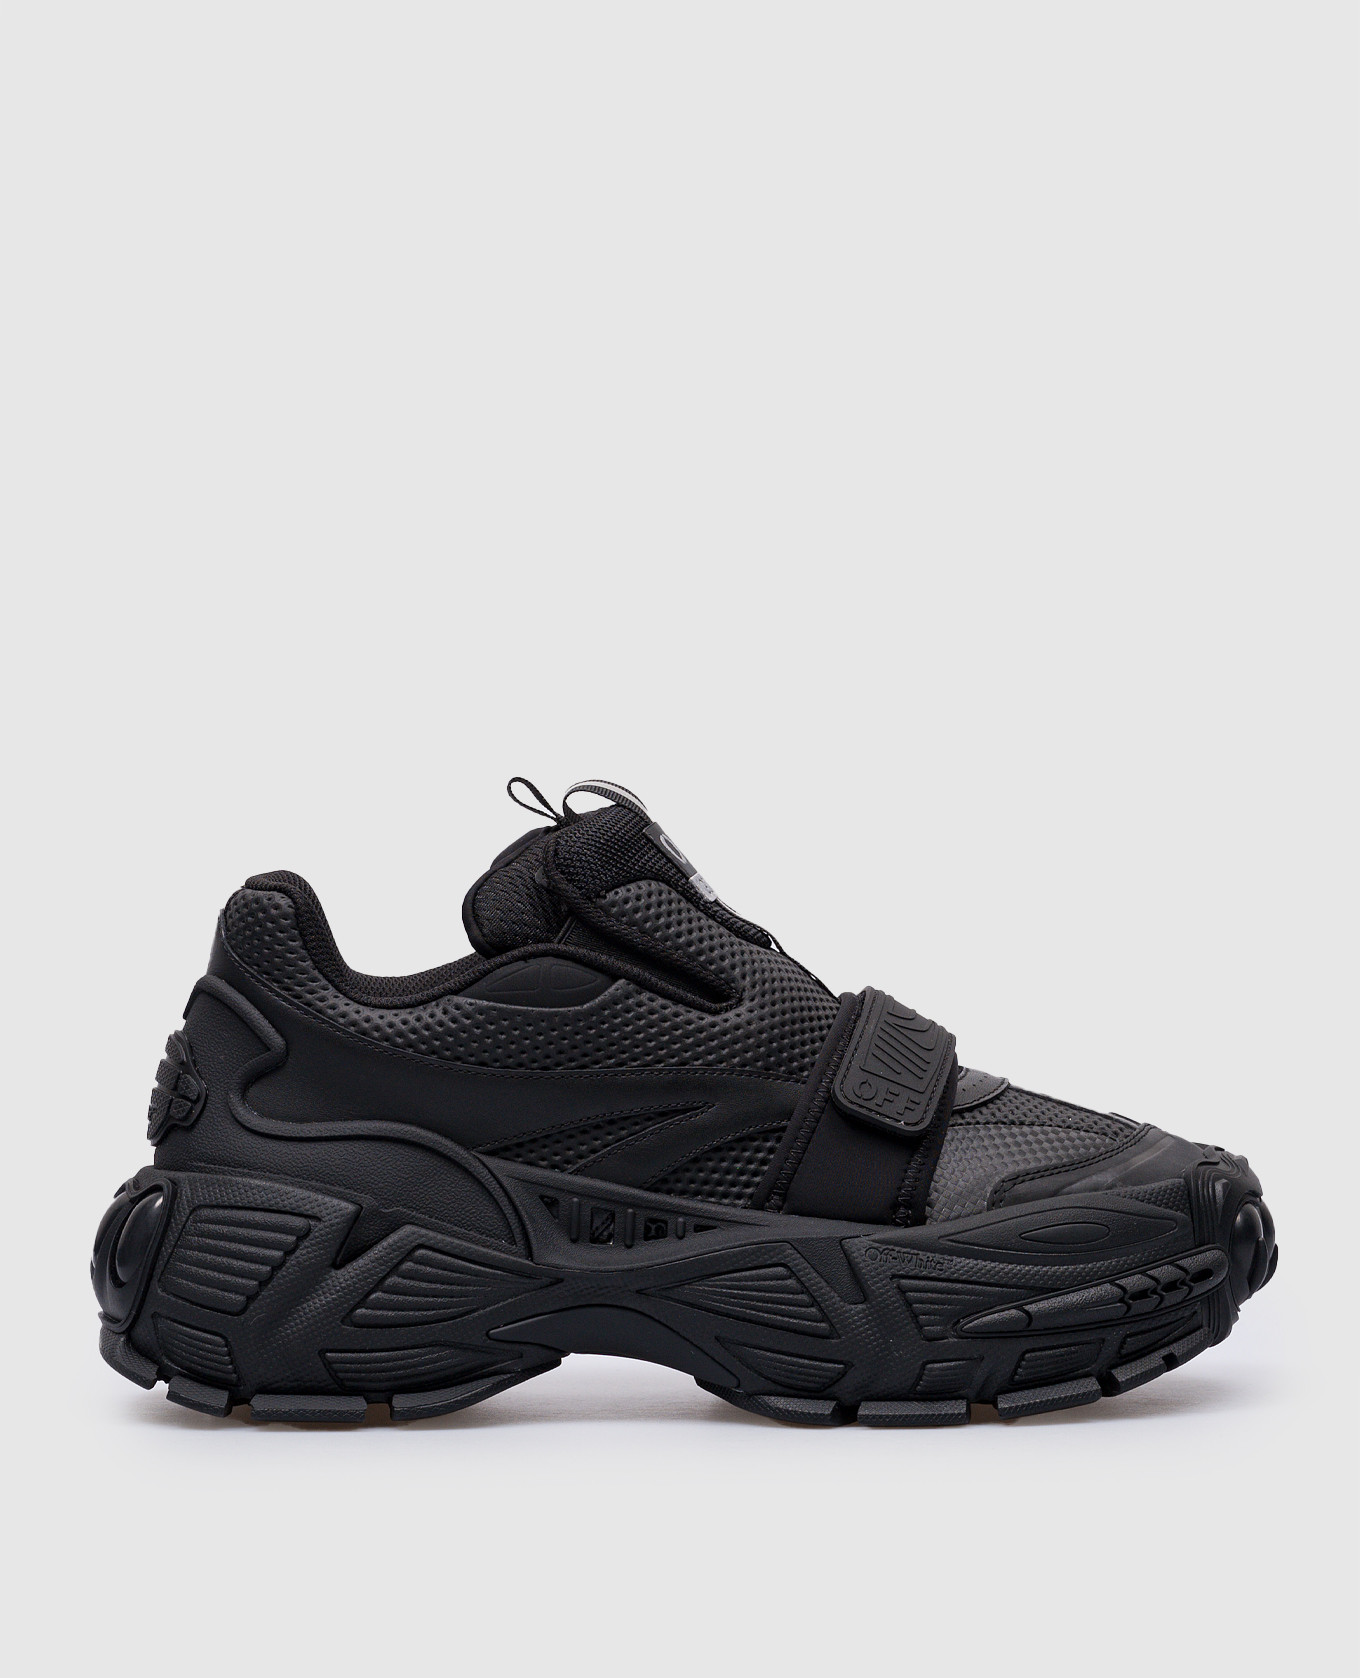 Black combination Glove Slip On sneakers